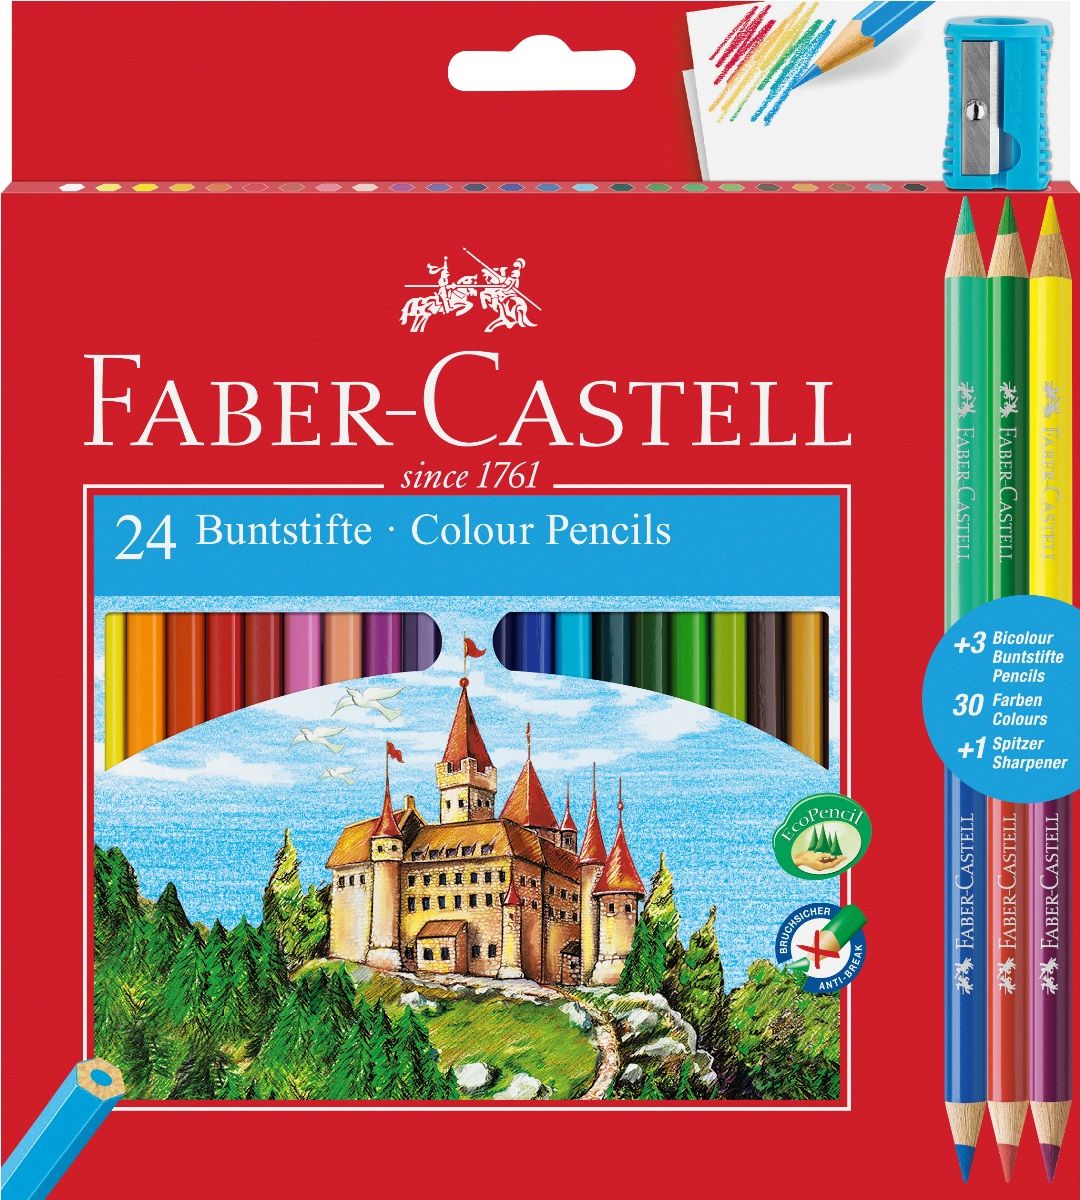 Faber-Castell Набор цветных карандашей Замок 24 цвета с точилкой + 3 двухцветных карандаша